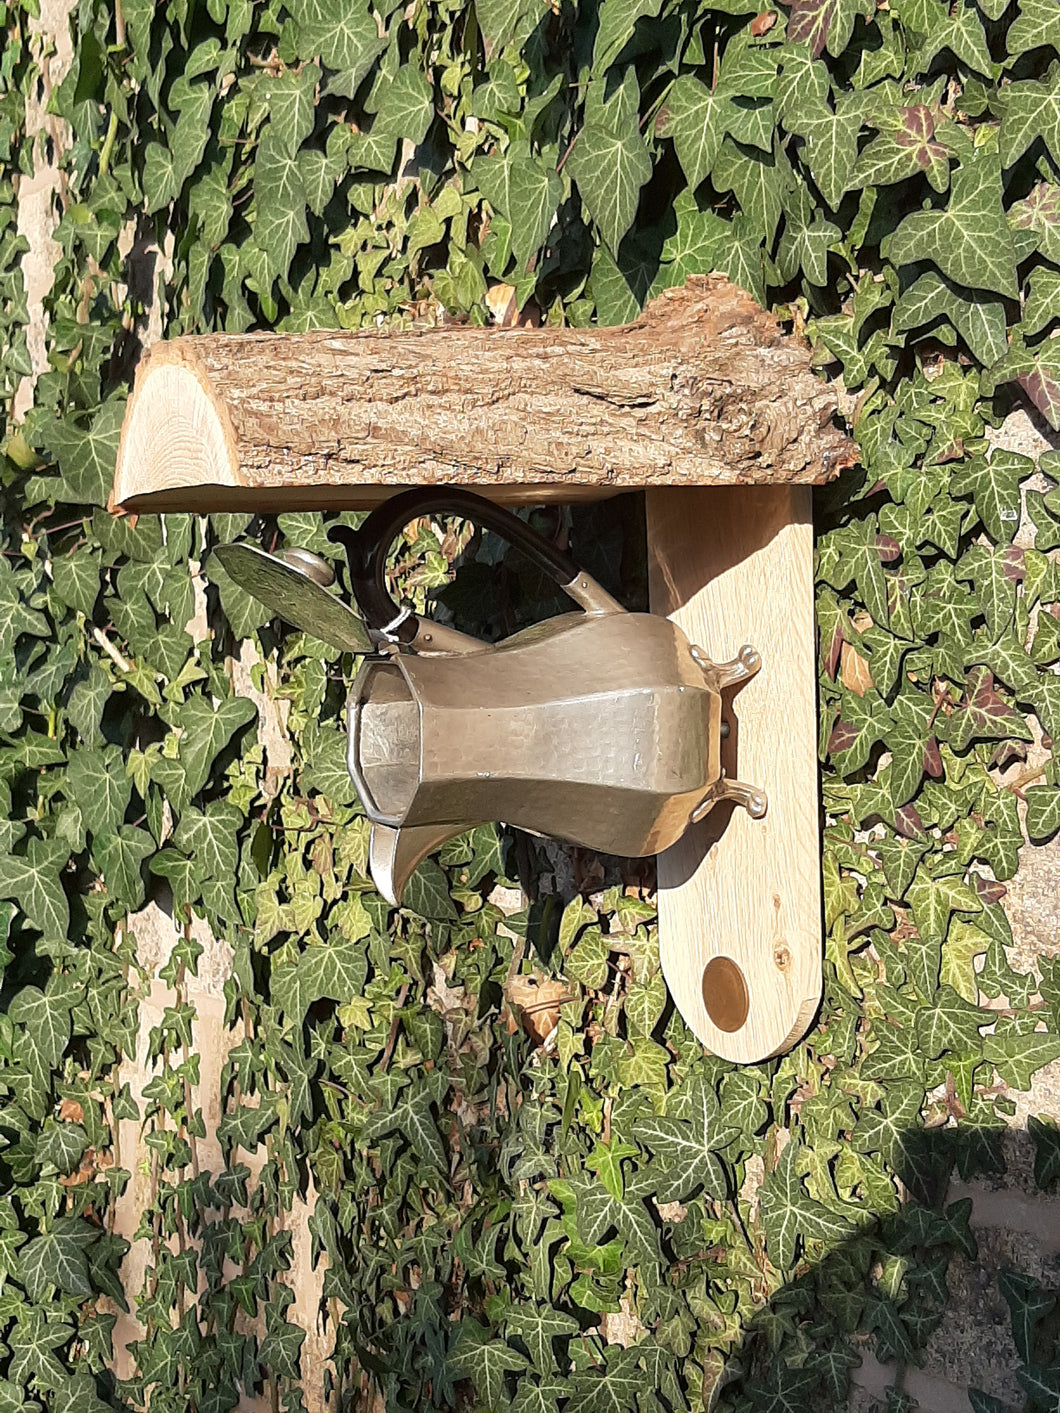 Pewter Coffee Pot Bird Feeder or planter